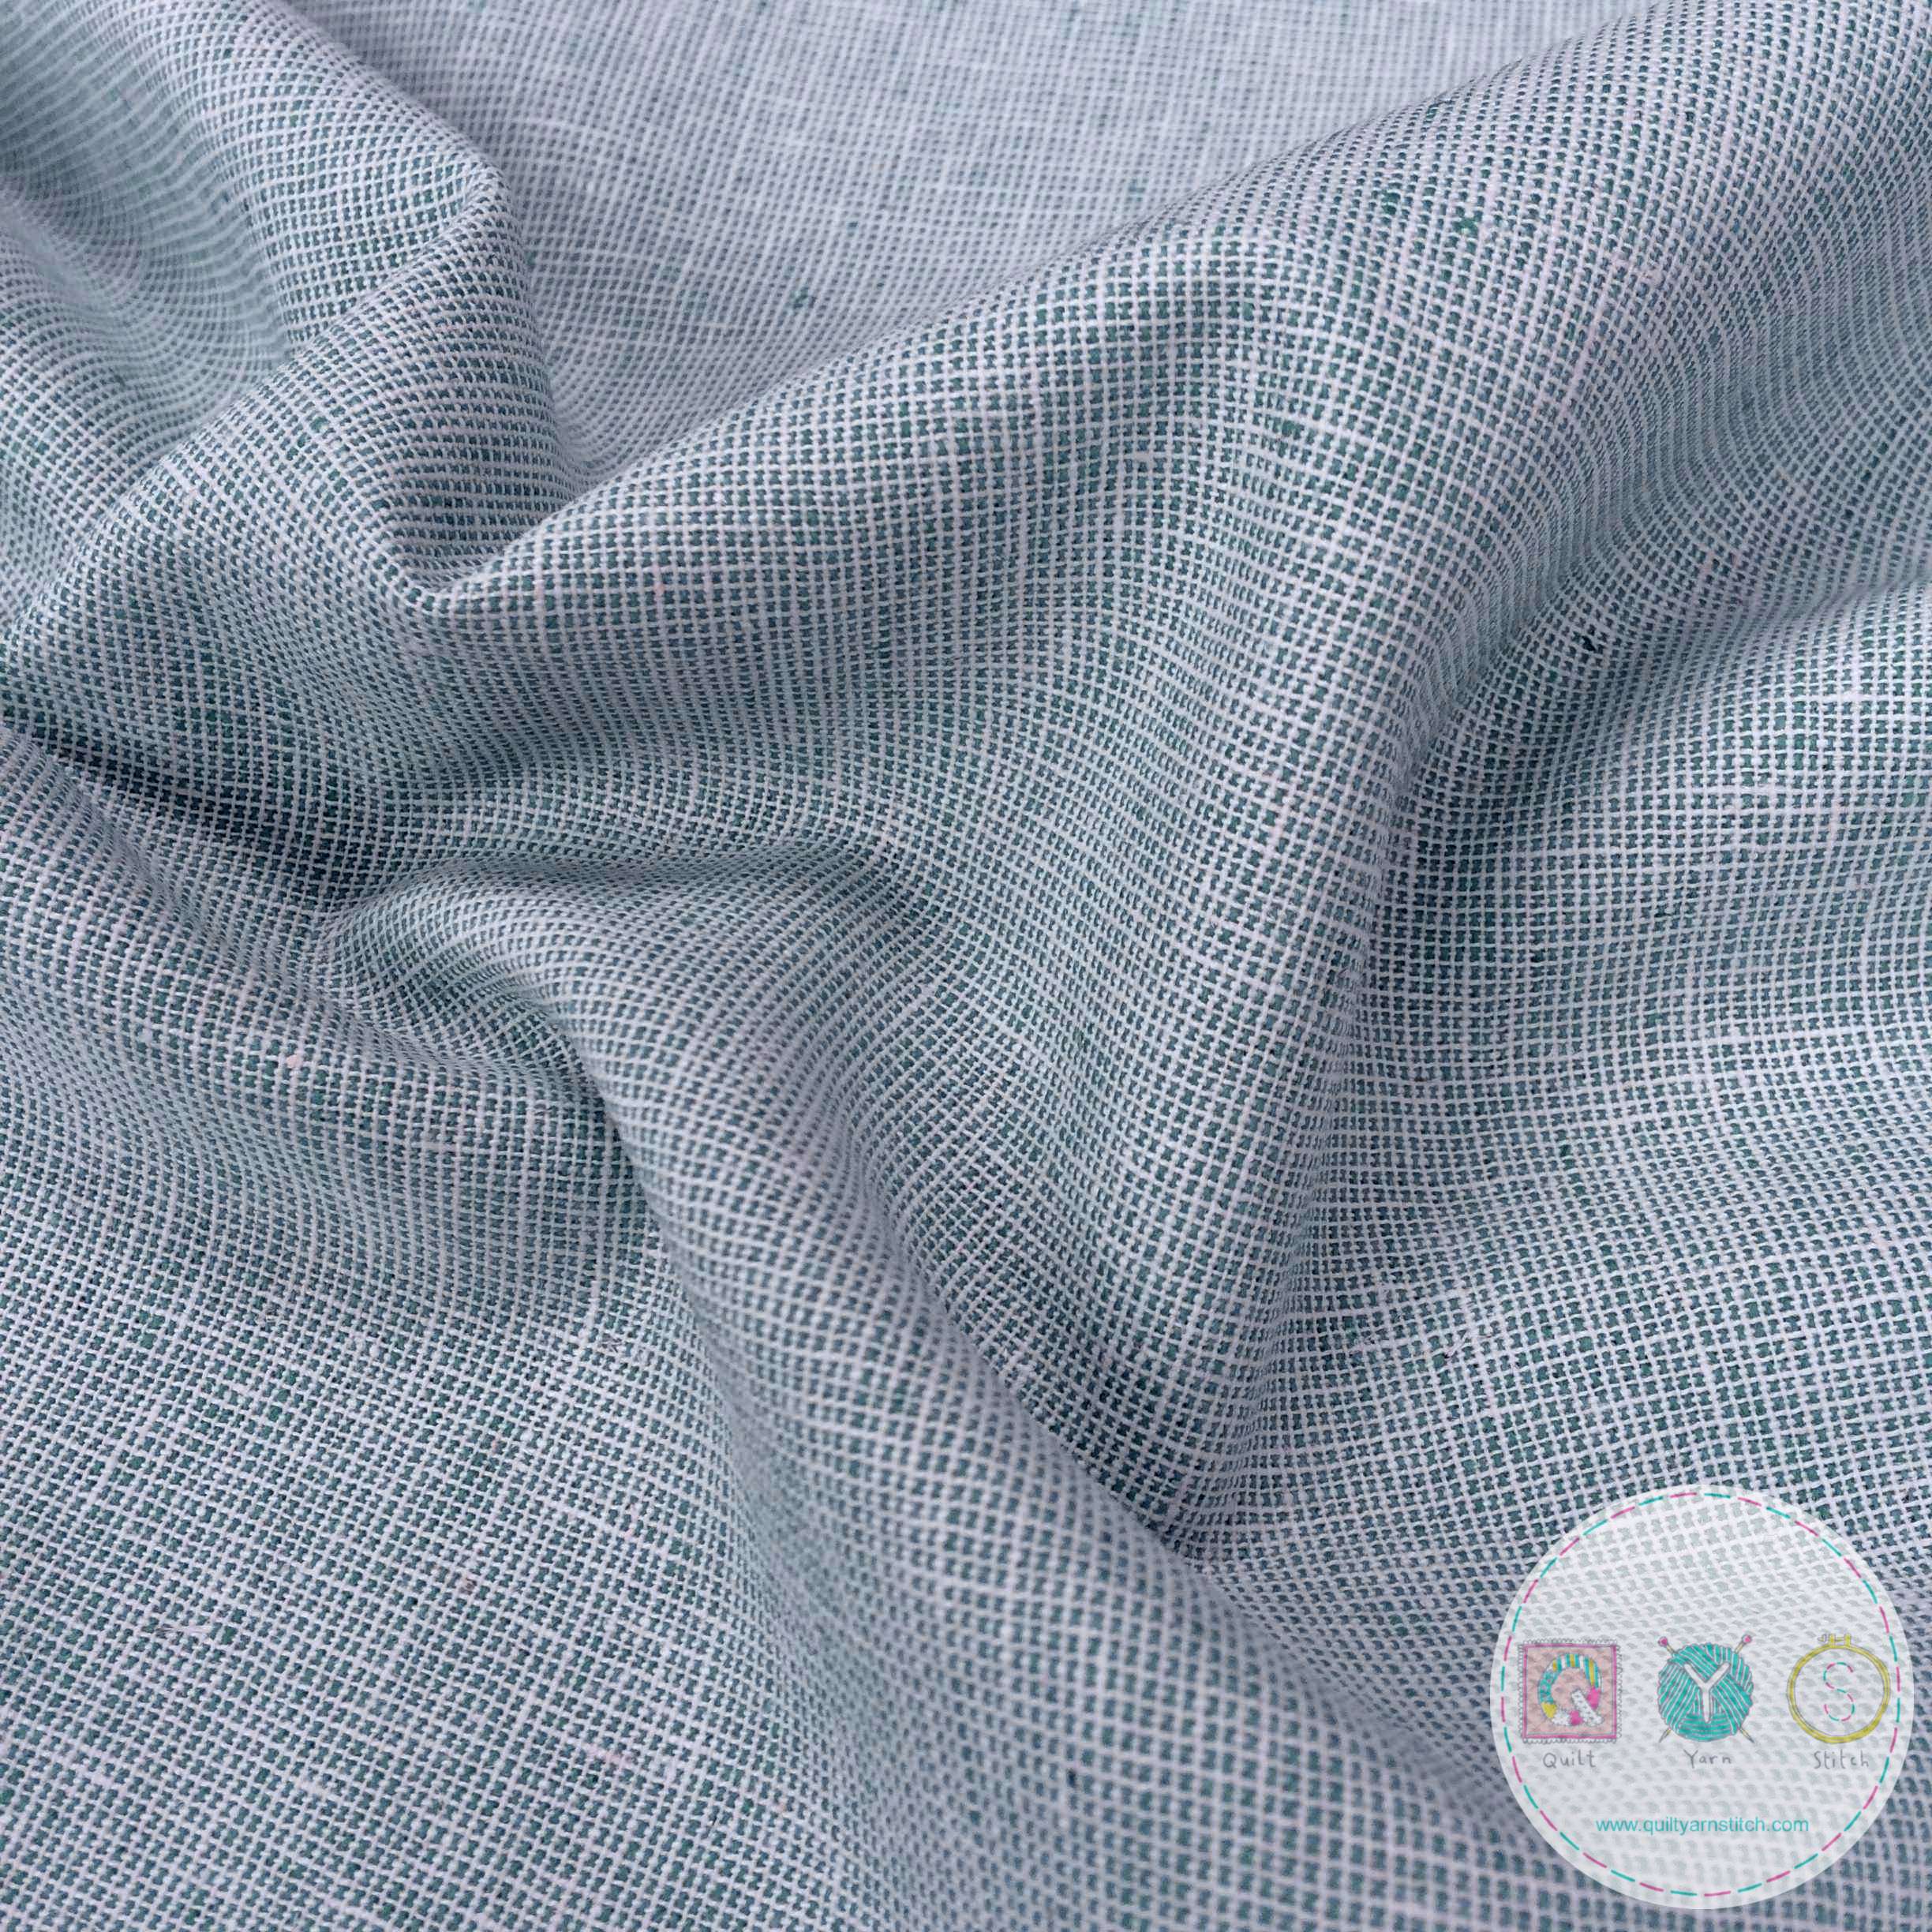 REMNANT - 0.54m - Light Blue Essex Yarn Dyed Homespun Chambray #1067 - Linen & Cotton Garment Fabric - by Robert Kaufman - Dressmaking